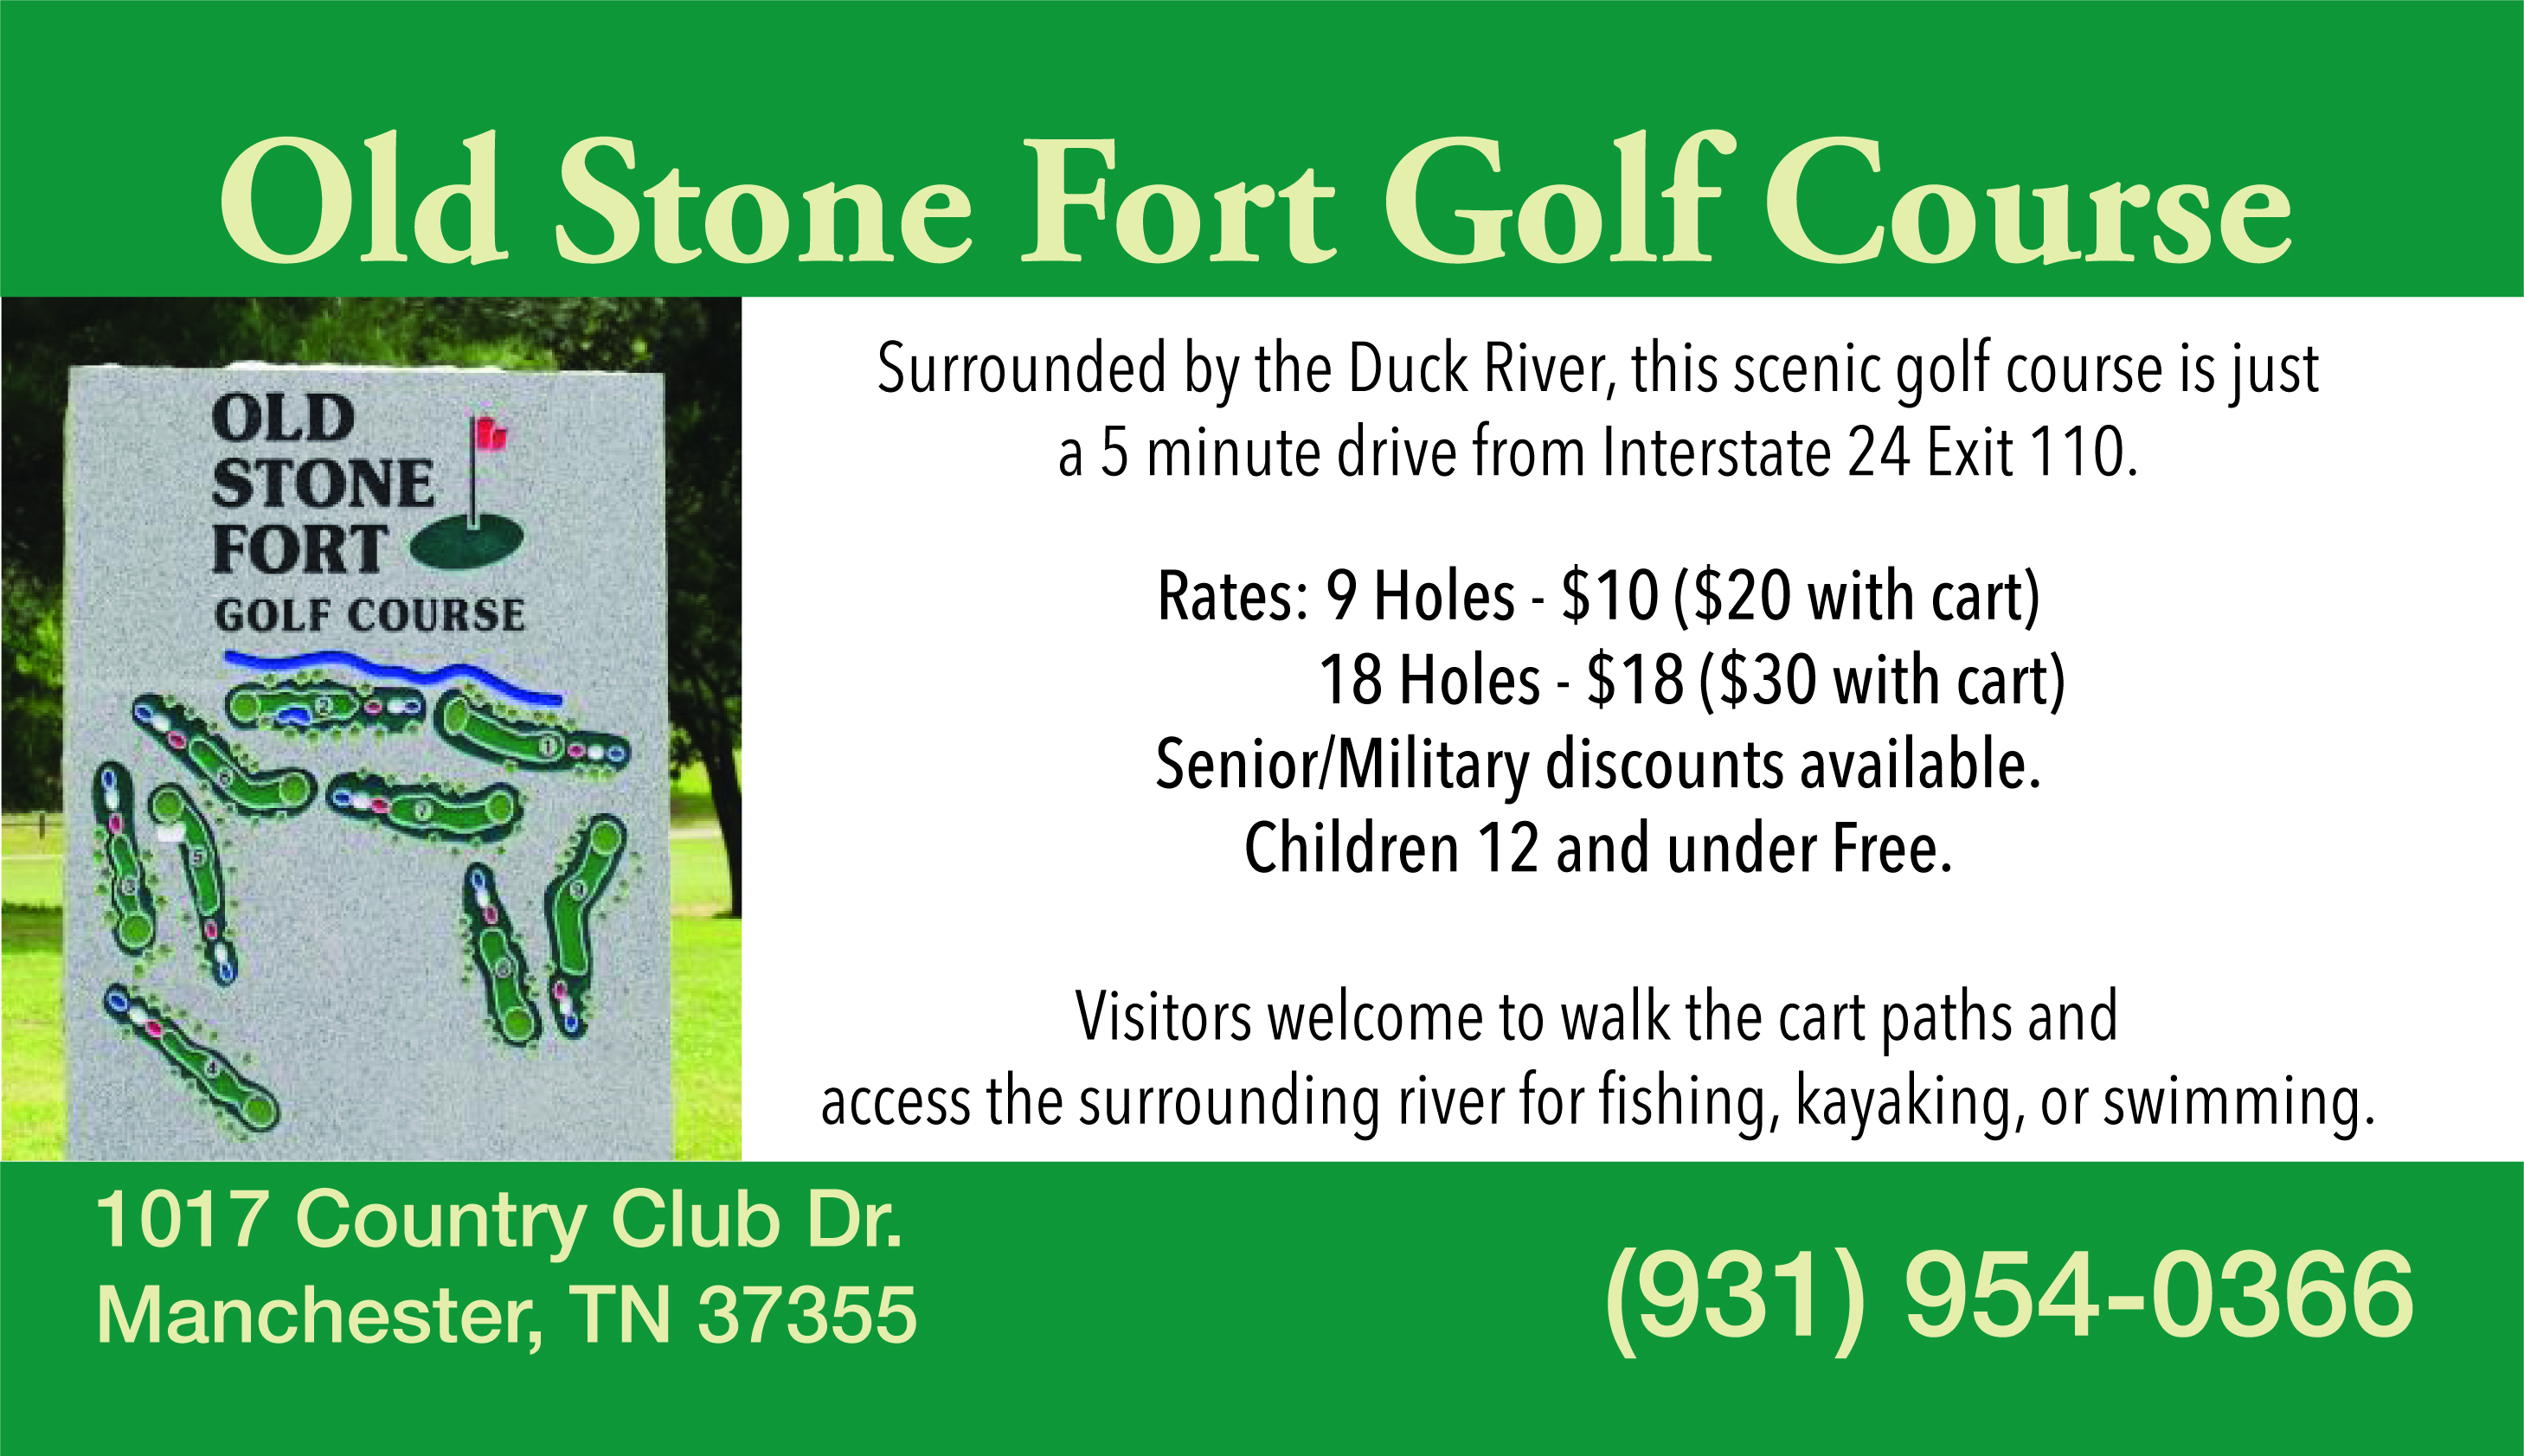 Old Srtone Fort Golf Cource ad